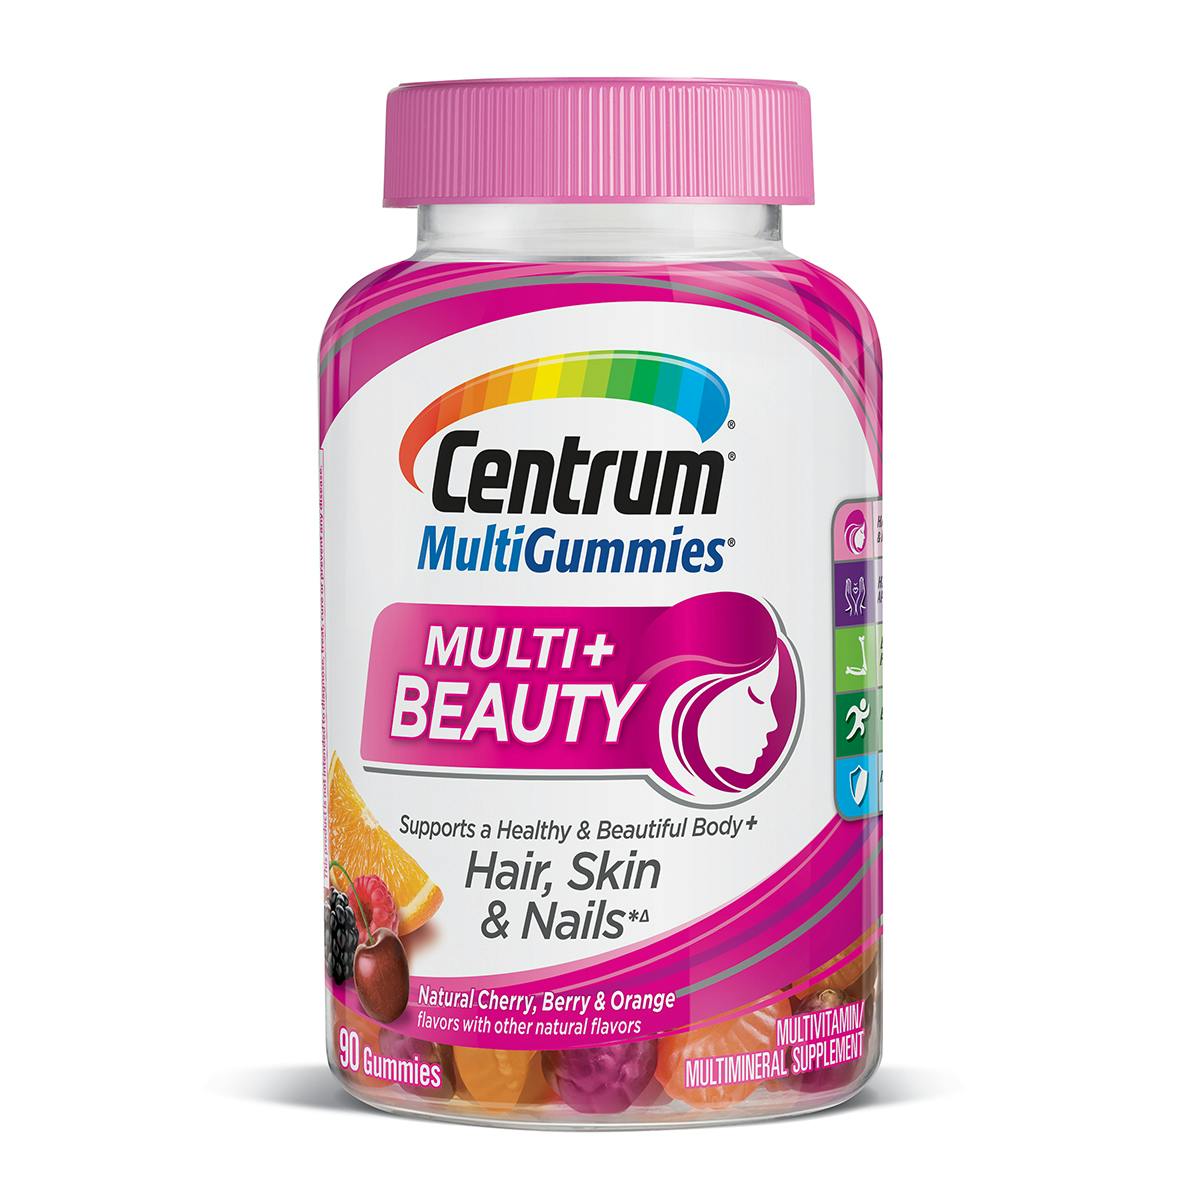 Bottle of Centrum MultiGummies Multi plus Beauty